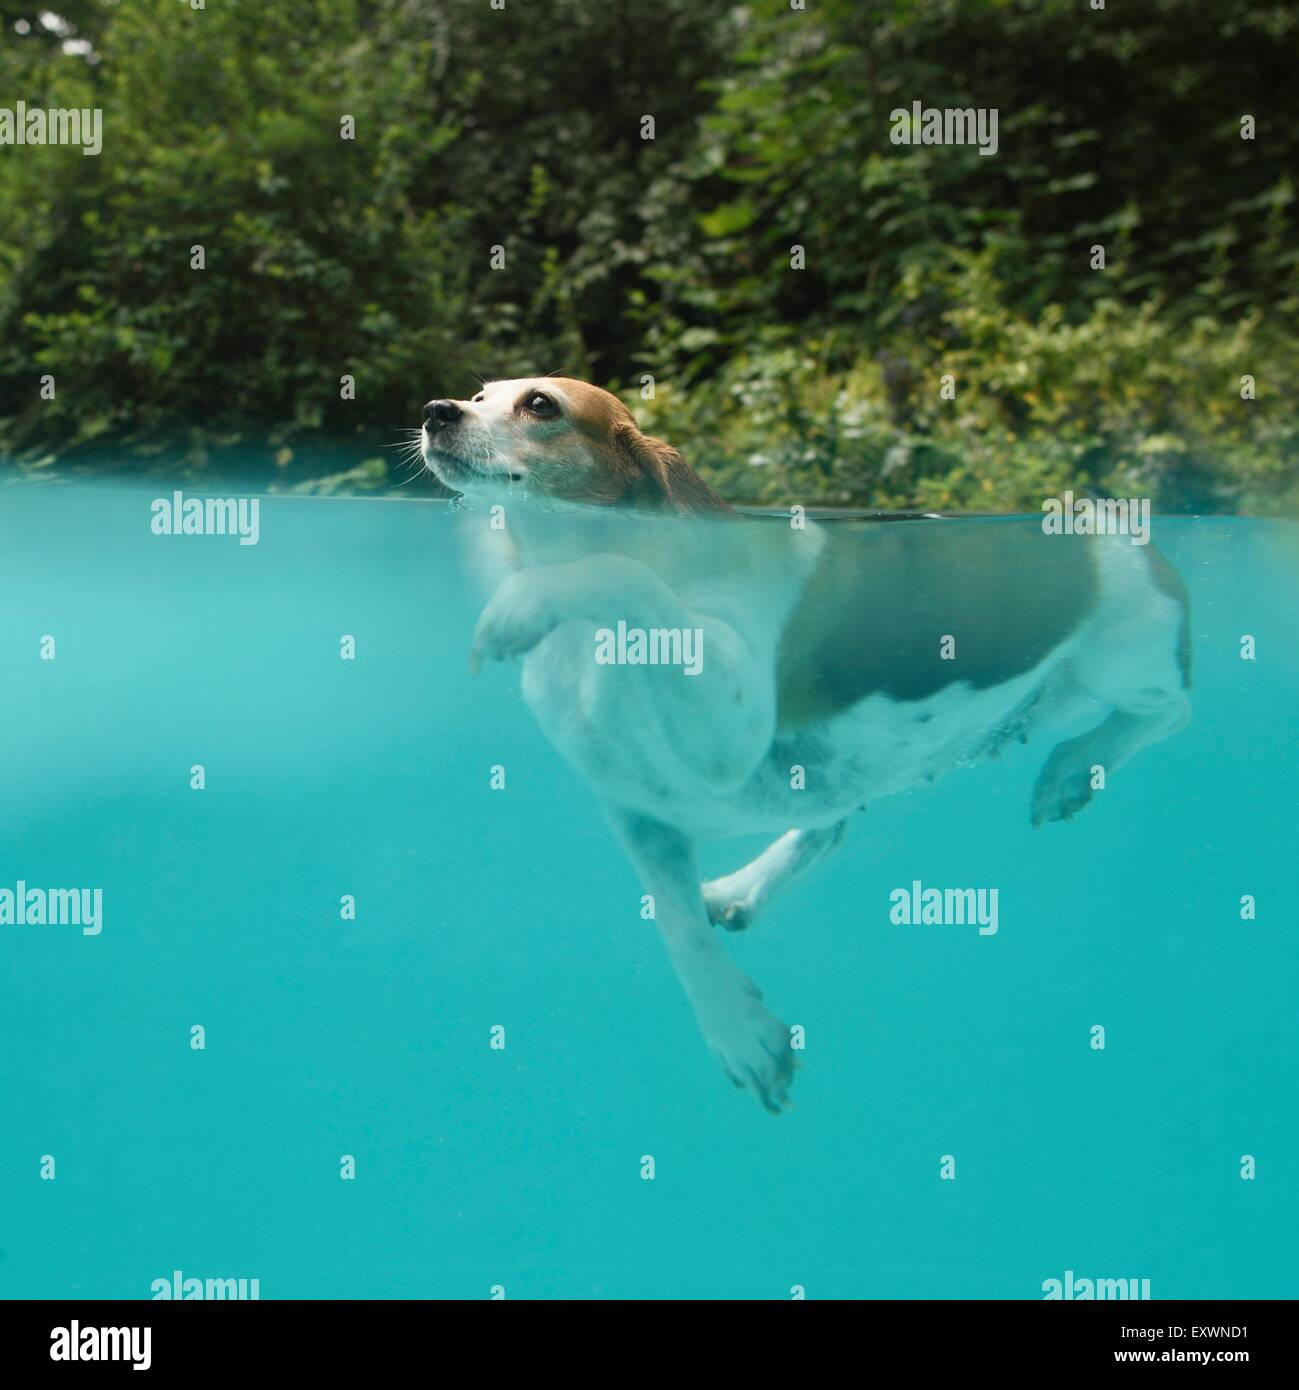 Beagle swimming in a pool Stock Photo